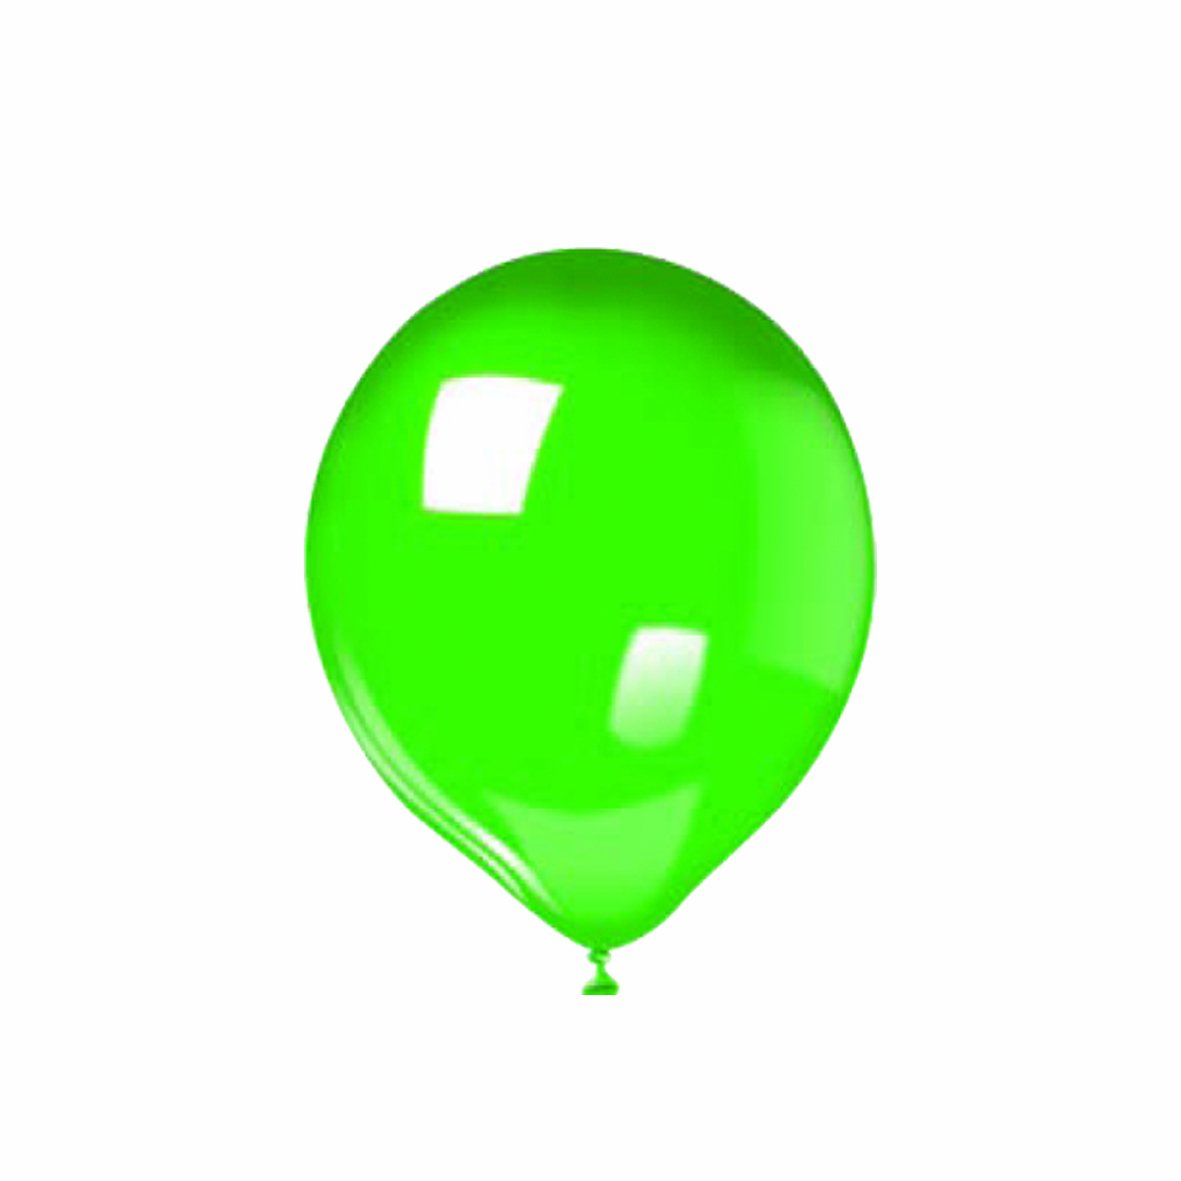 Palloncino - diametro 26 cm - lattice - verde - Big Party - conf. 25 pezzi